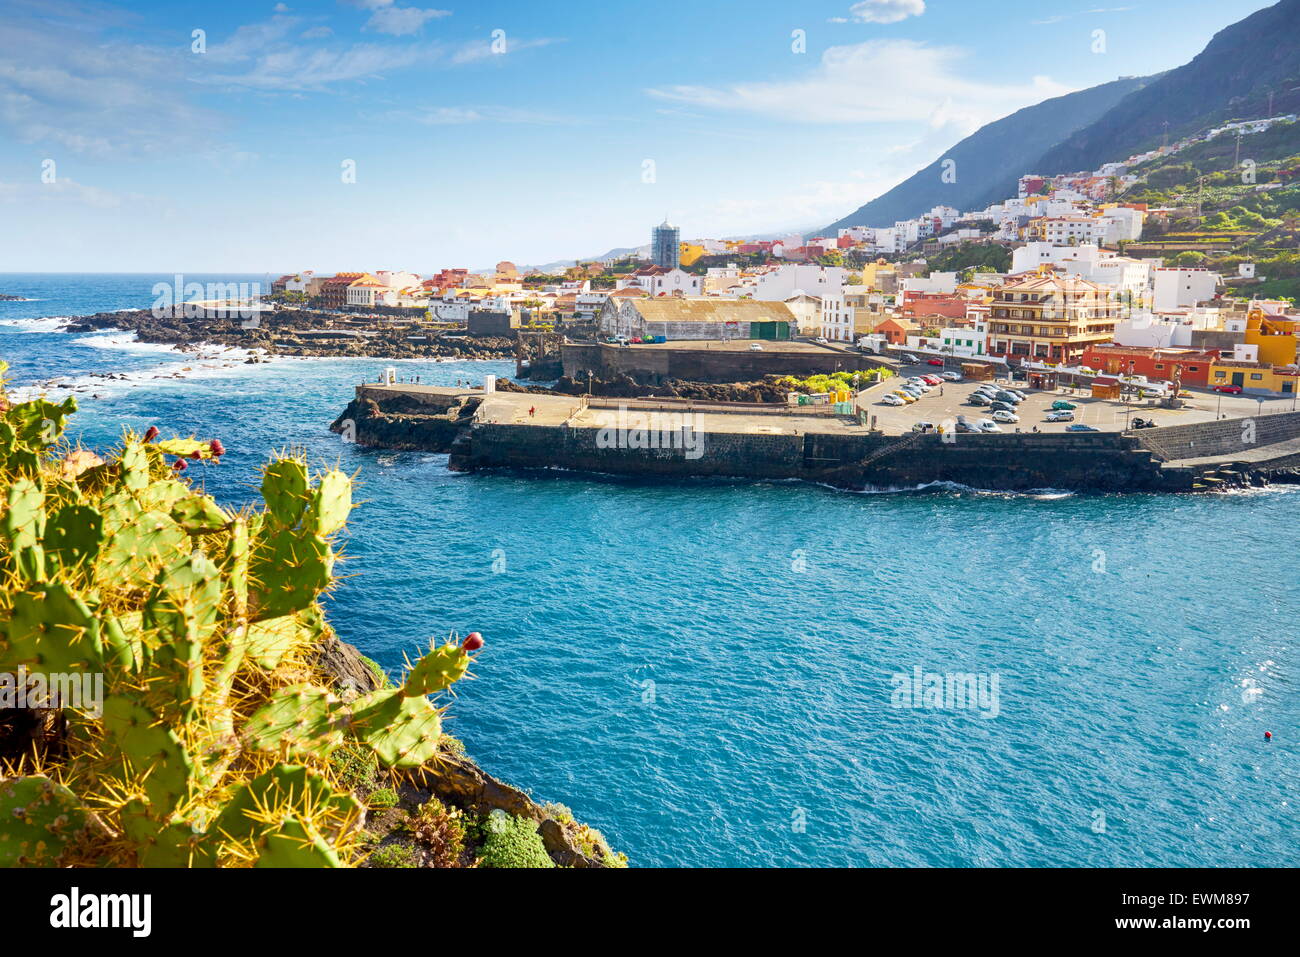 Puerto de la Cruz, Tenerife, Canary Islands, Spain Stock Photo